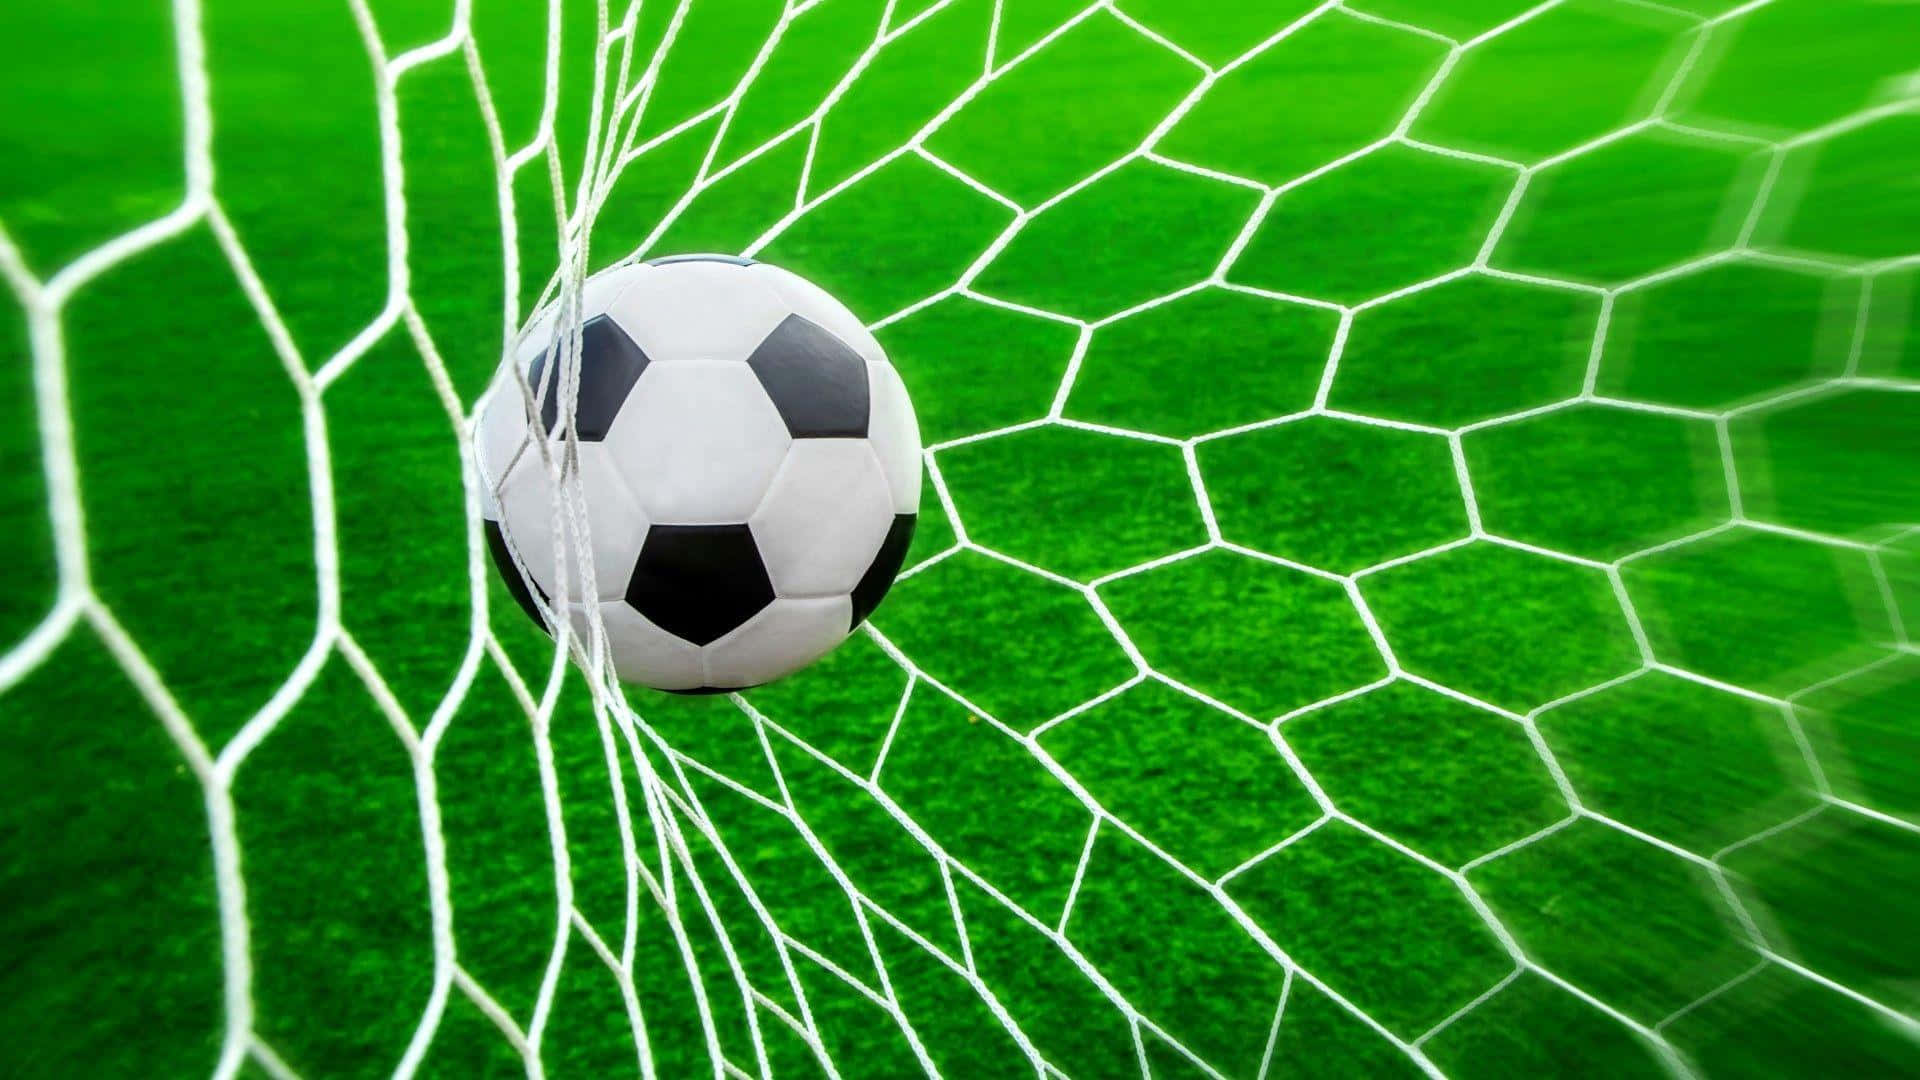 A Vibrant Close-up Shot of a Soccer Ball